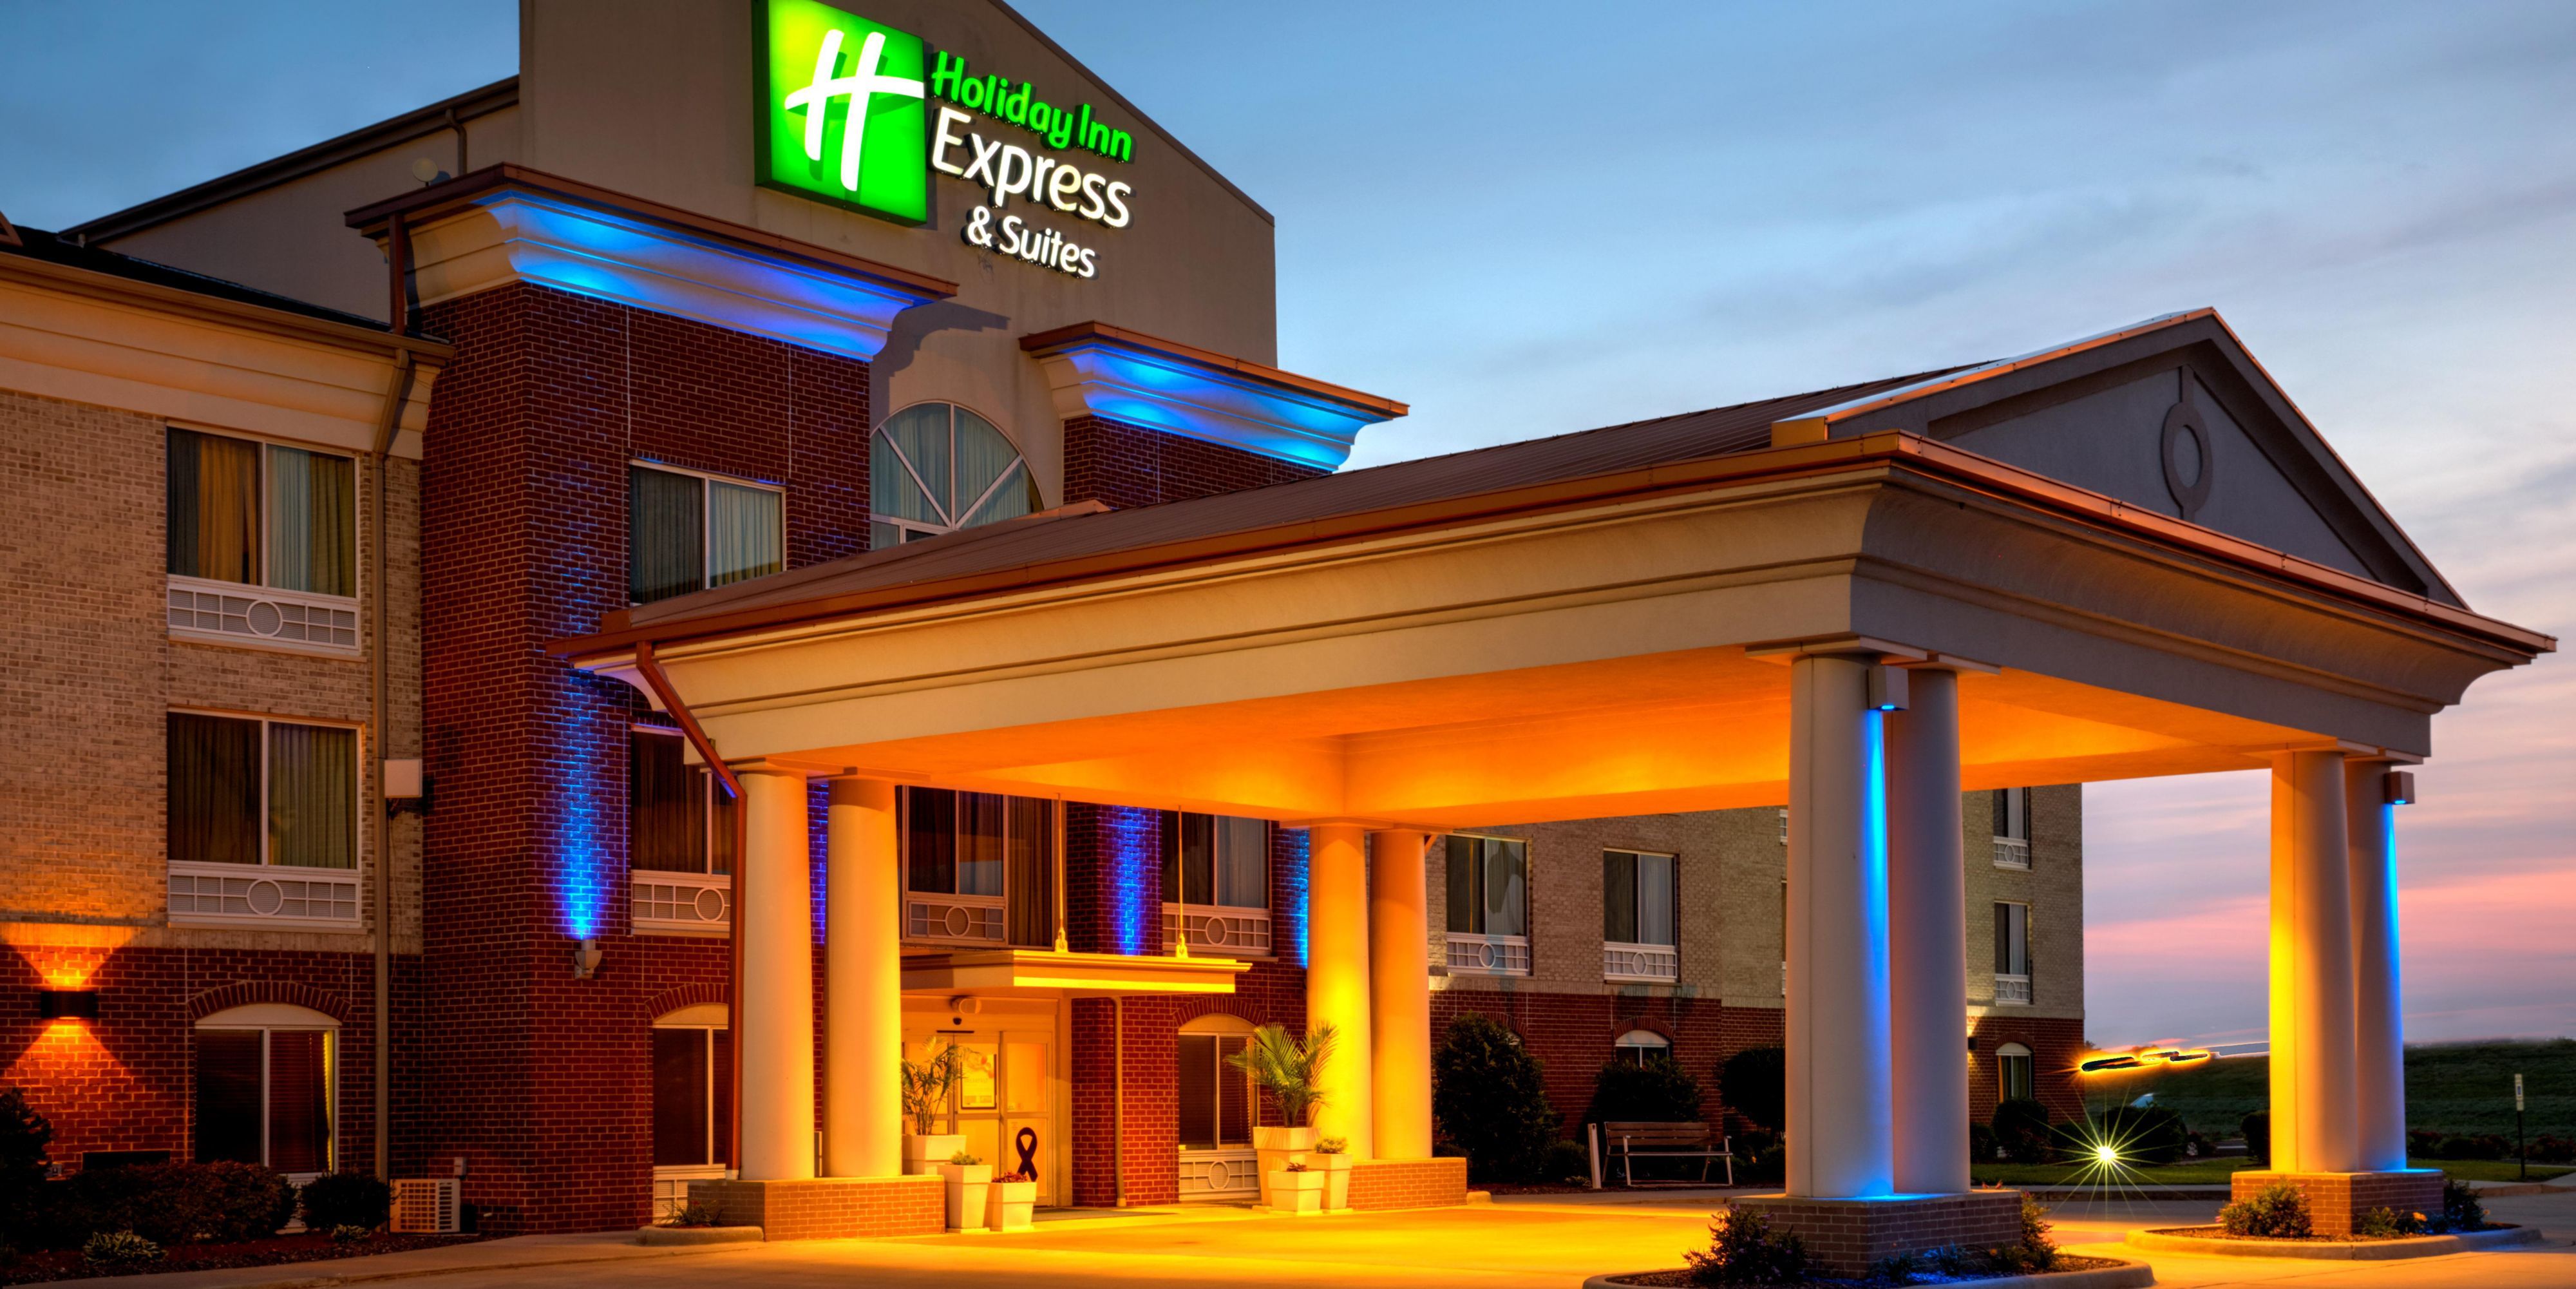 Photo of Holiday Inn Express & Suites Vandalia, Vandalia, IL